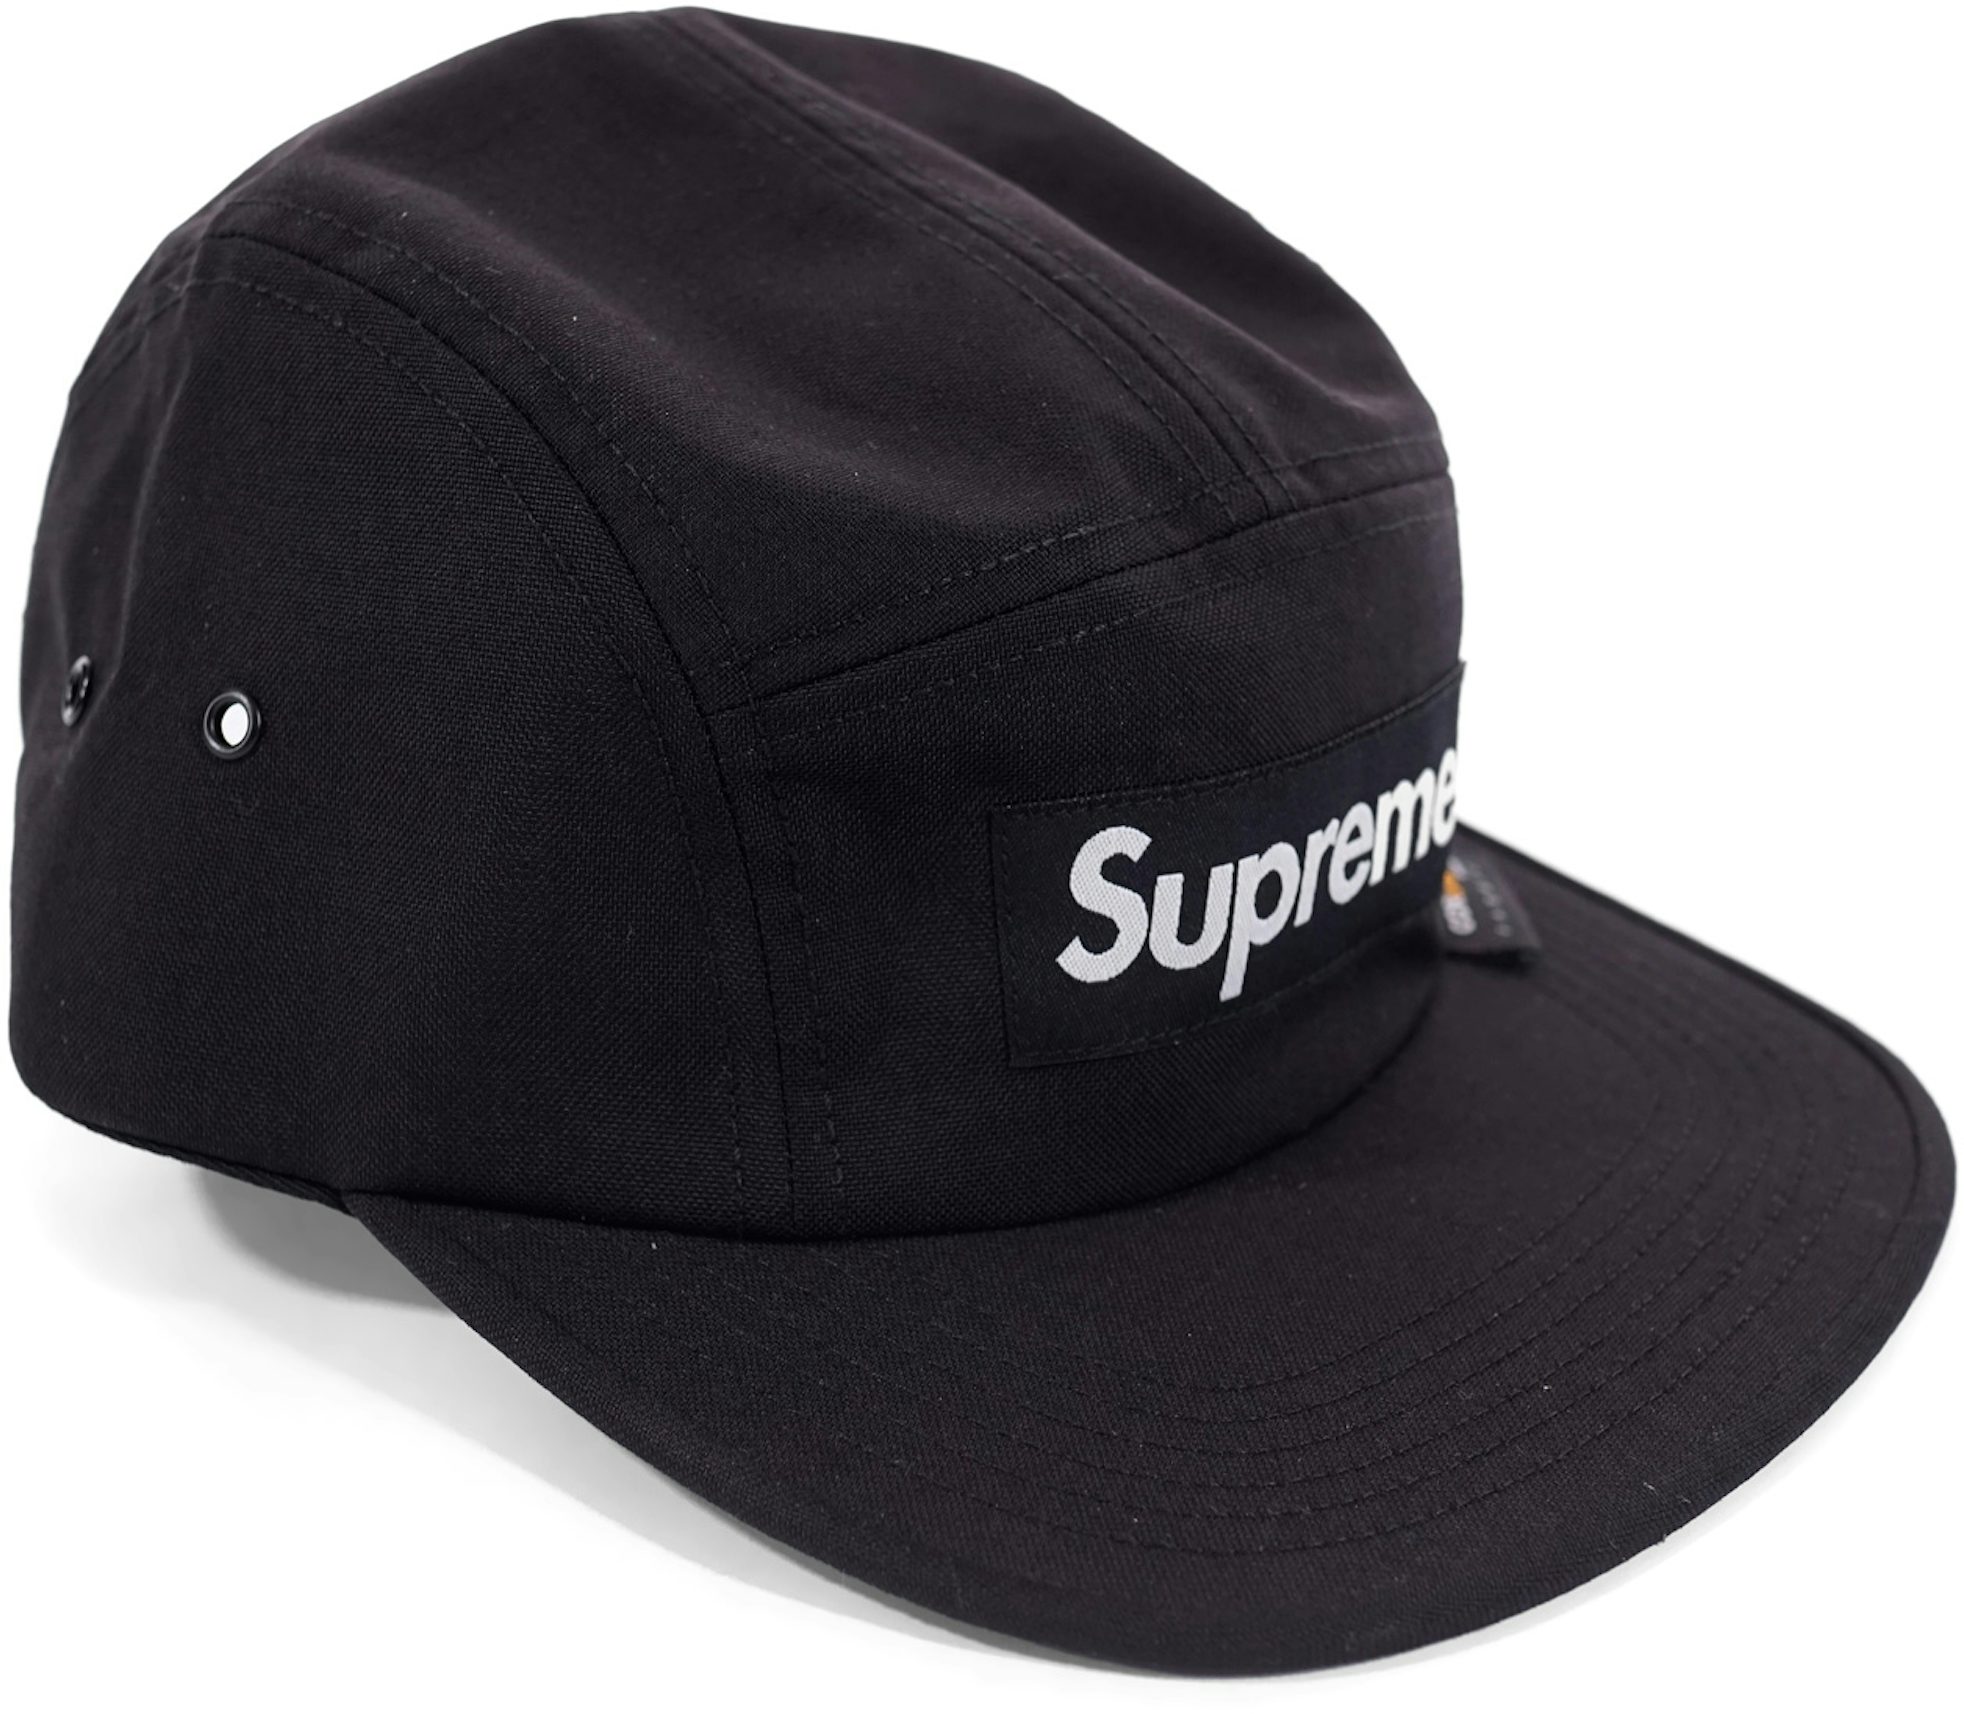 Supreme Bonded Mesh Camp Cap in Black. Never worn